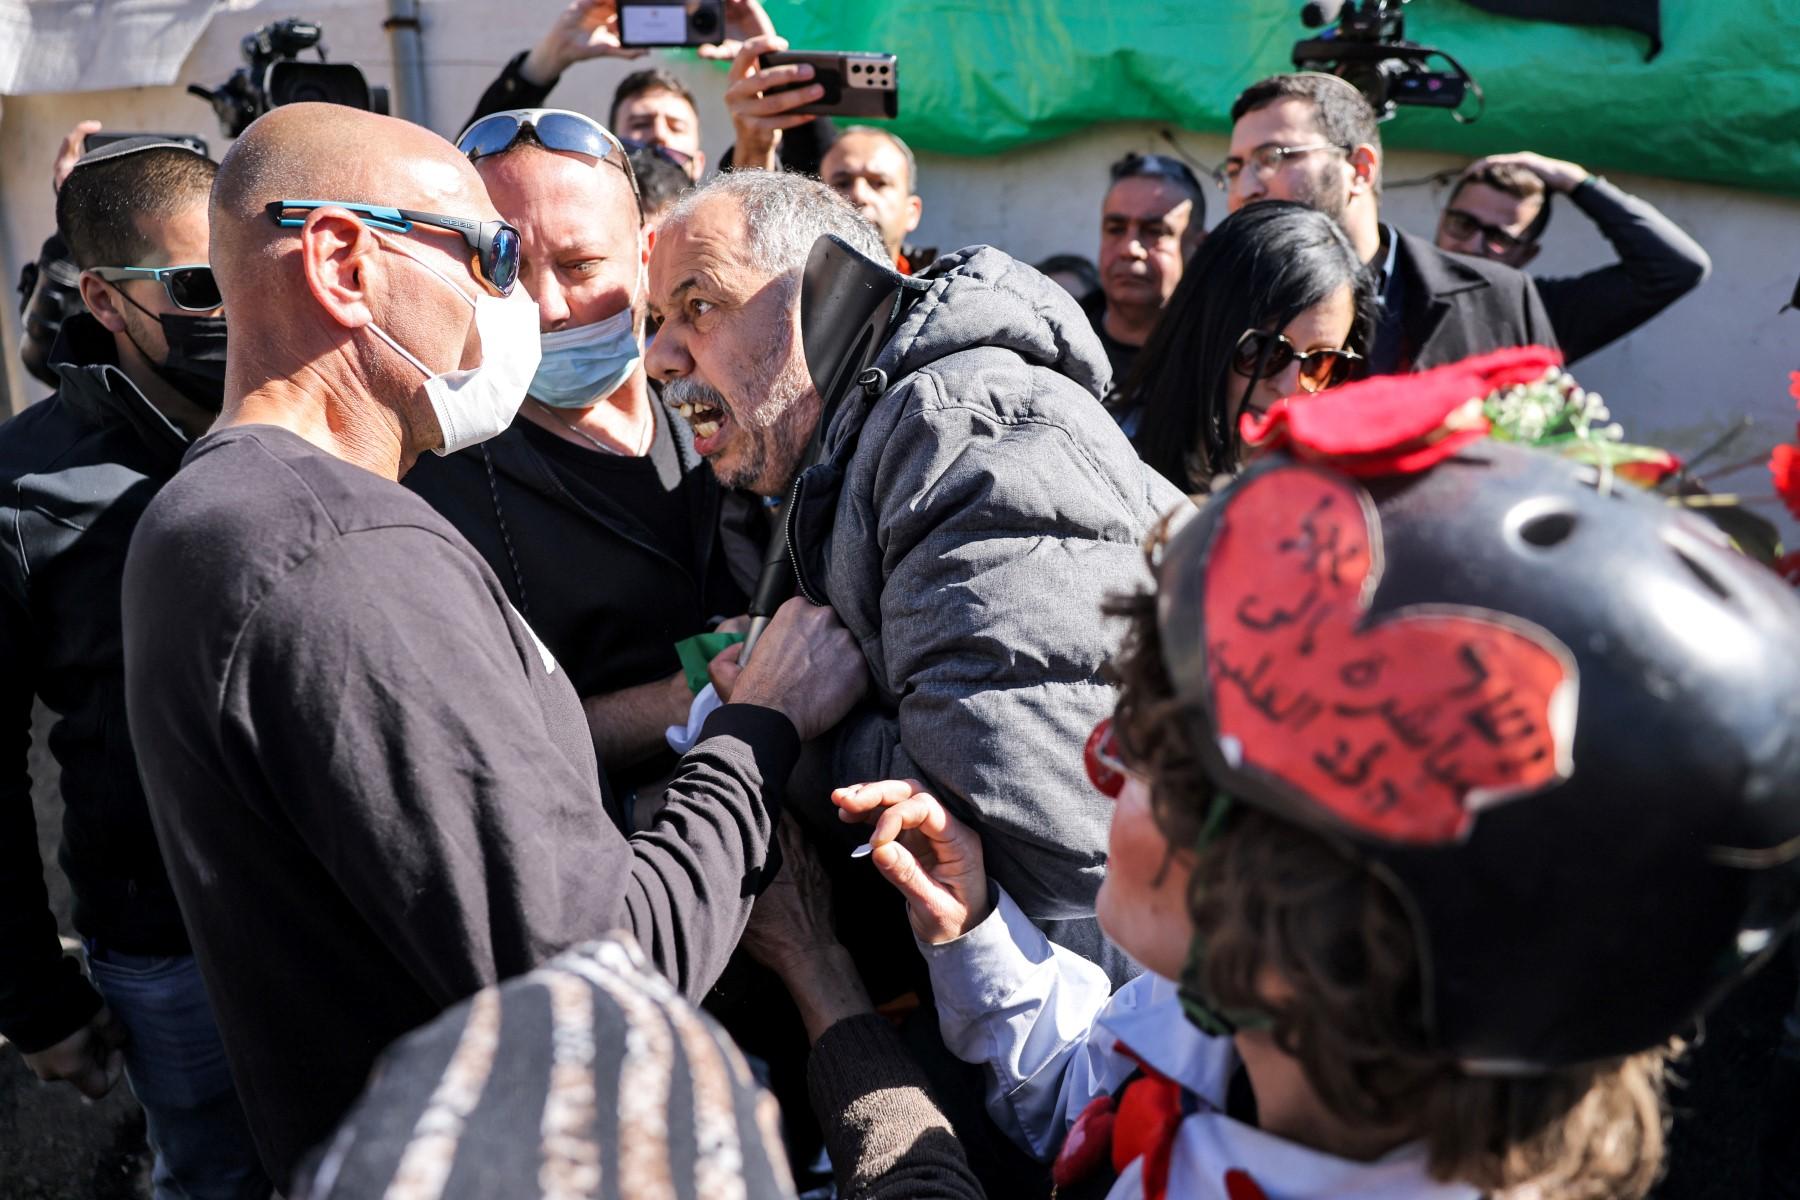 A Palestinian man (centre) confronts a plainclothes Israeli policeman (left) in the east Jerusalem neighbourhood of Sheikh Jarrah on Feb 13. Photo: AFP